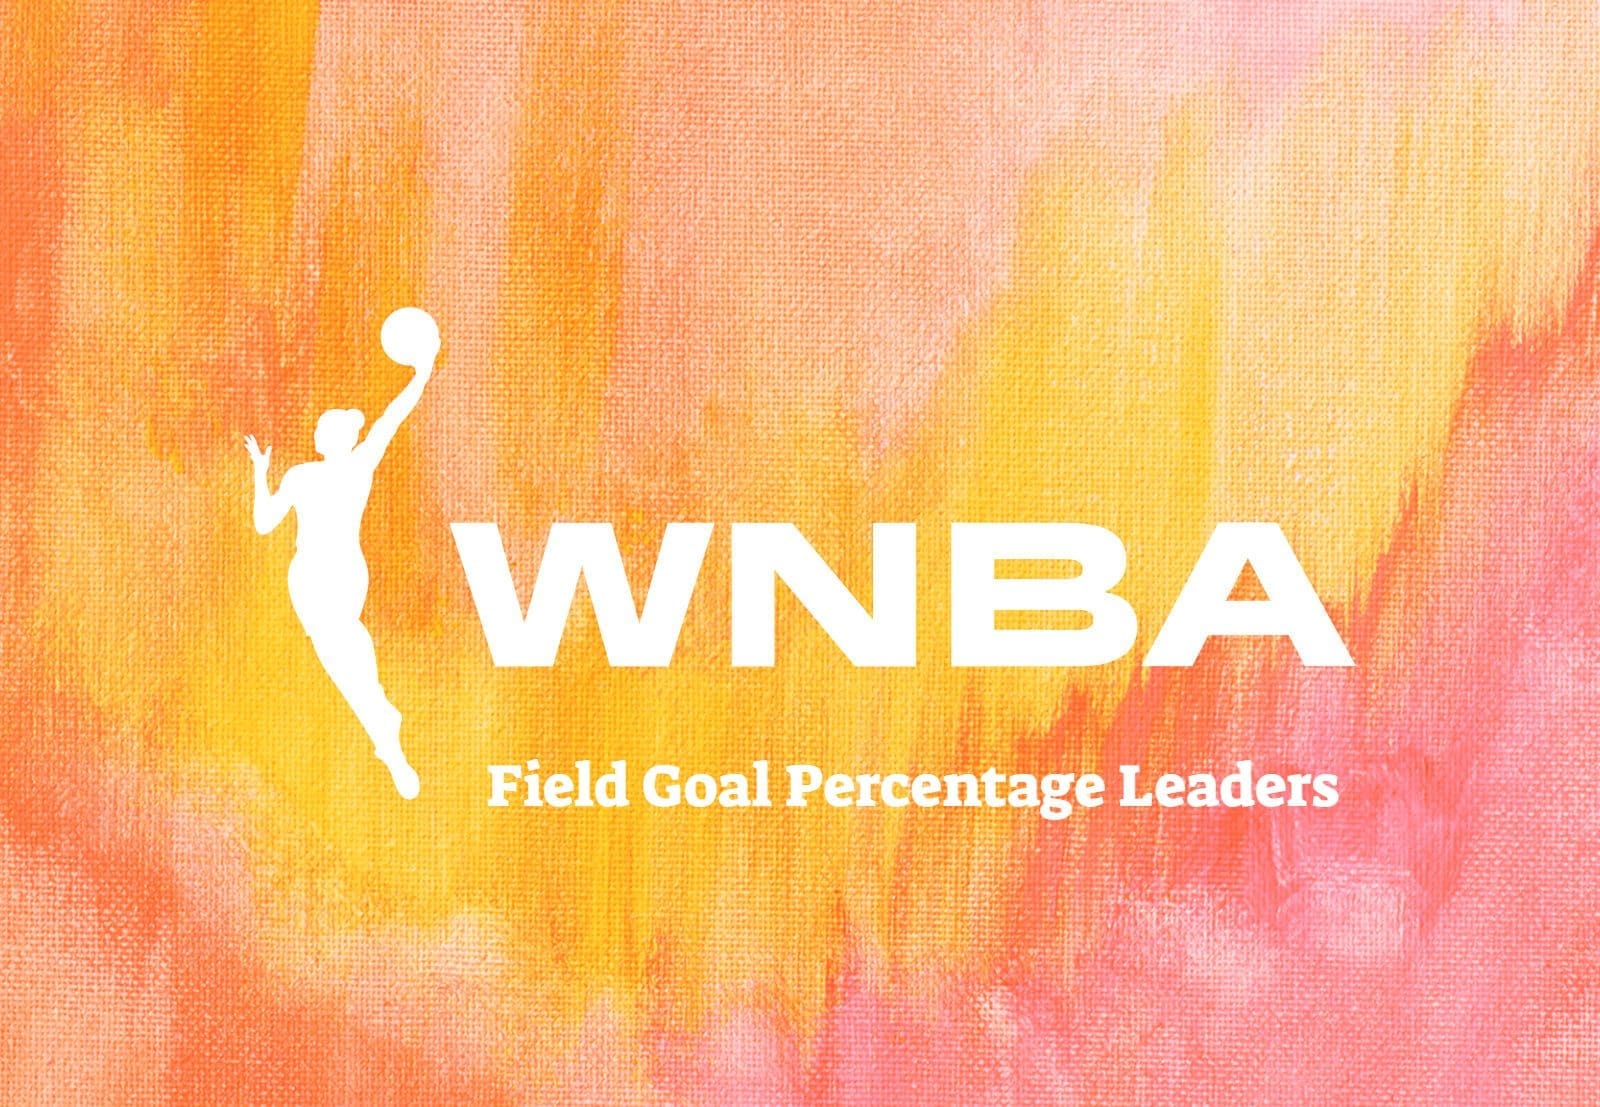 WNBA Field Goal Percentage Leaders